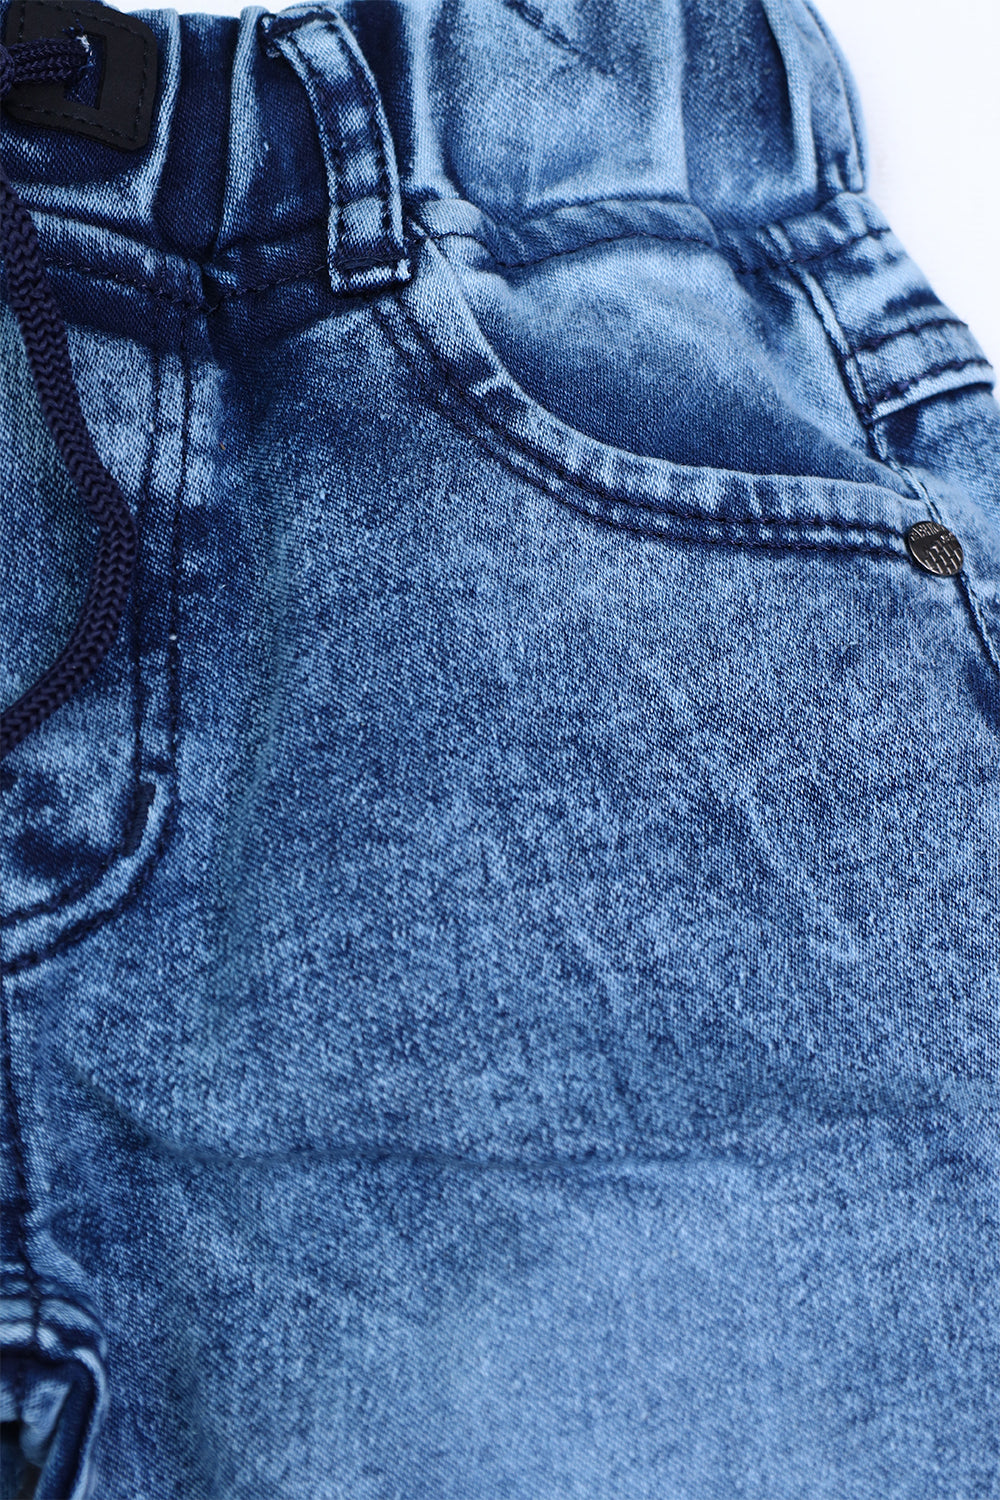 Light blue Denim pant 100% cotton fabric